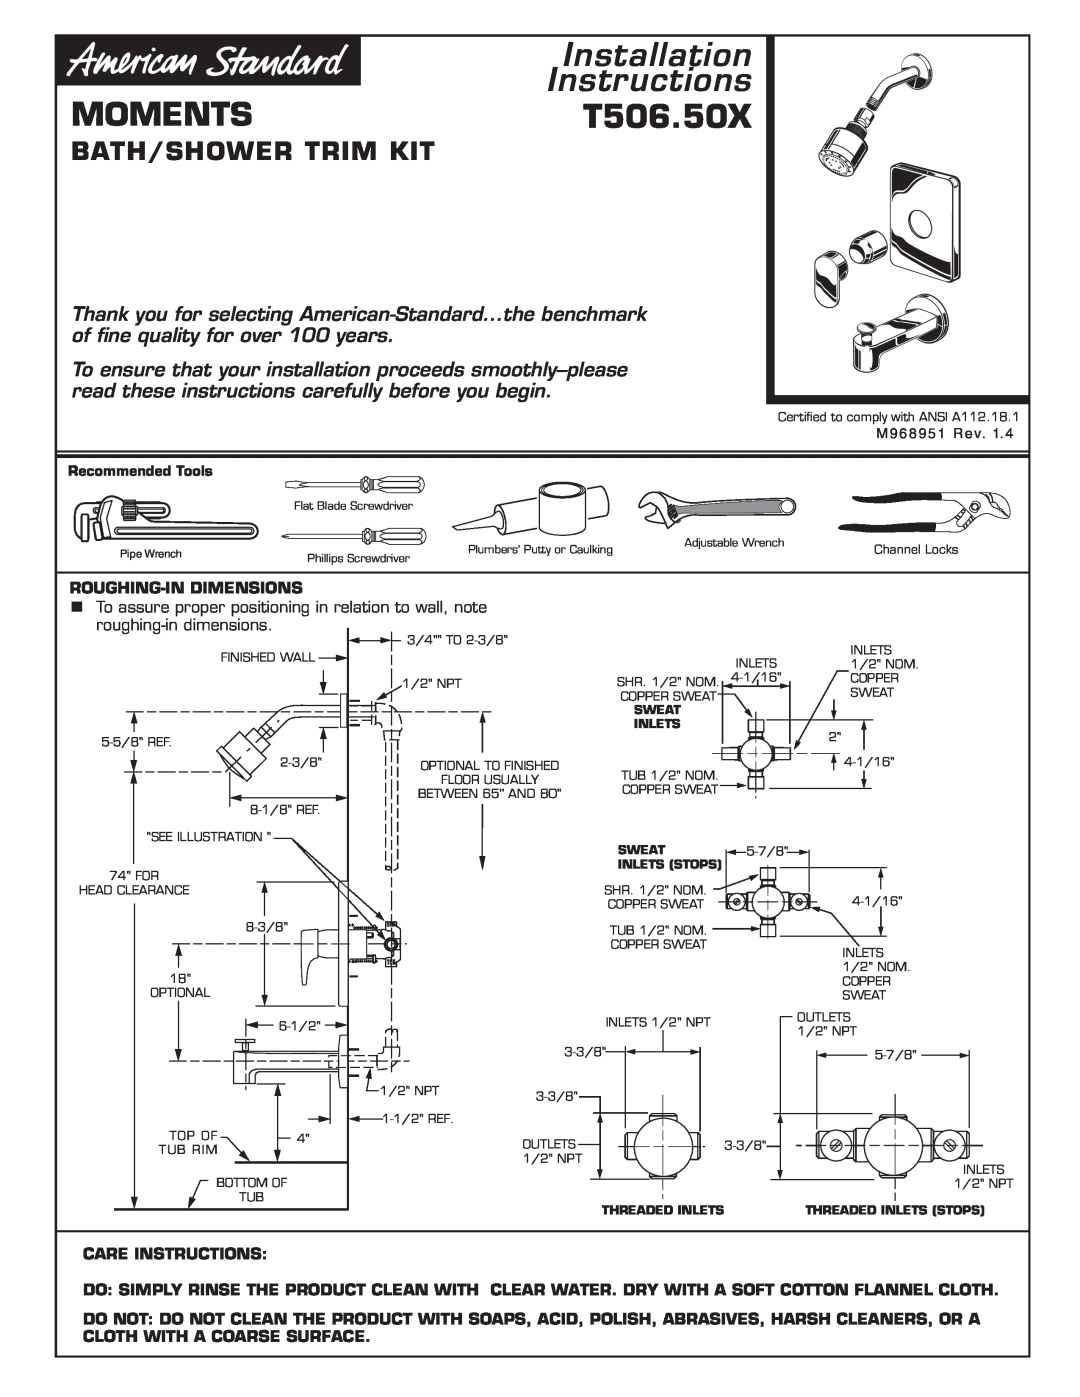 American Standard Bath/Shower Trim Kit installation instructions Installation Instructions, MOMENTST506.50X 